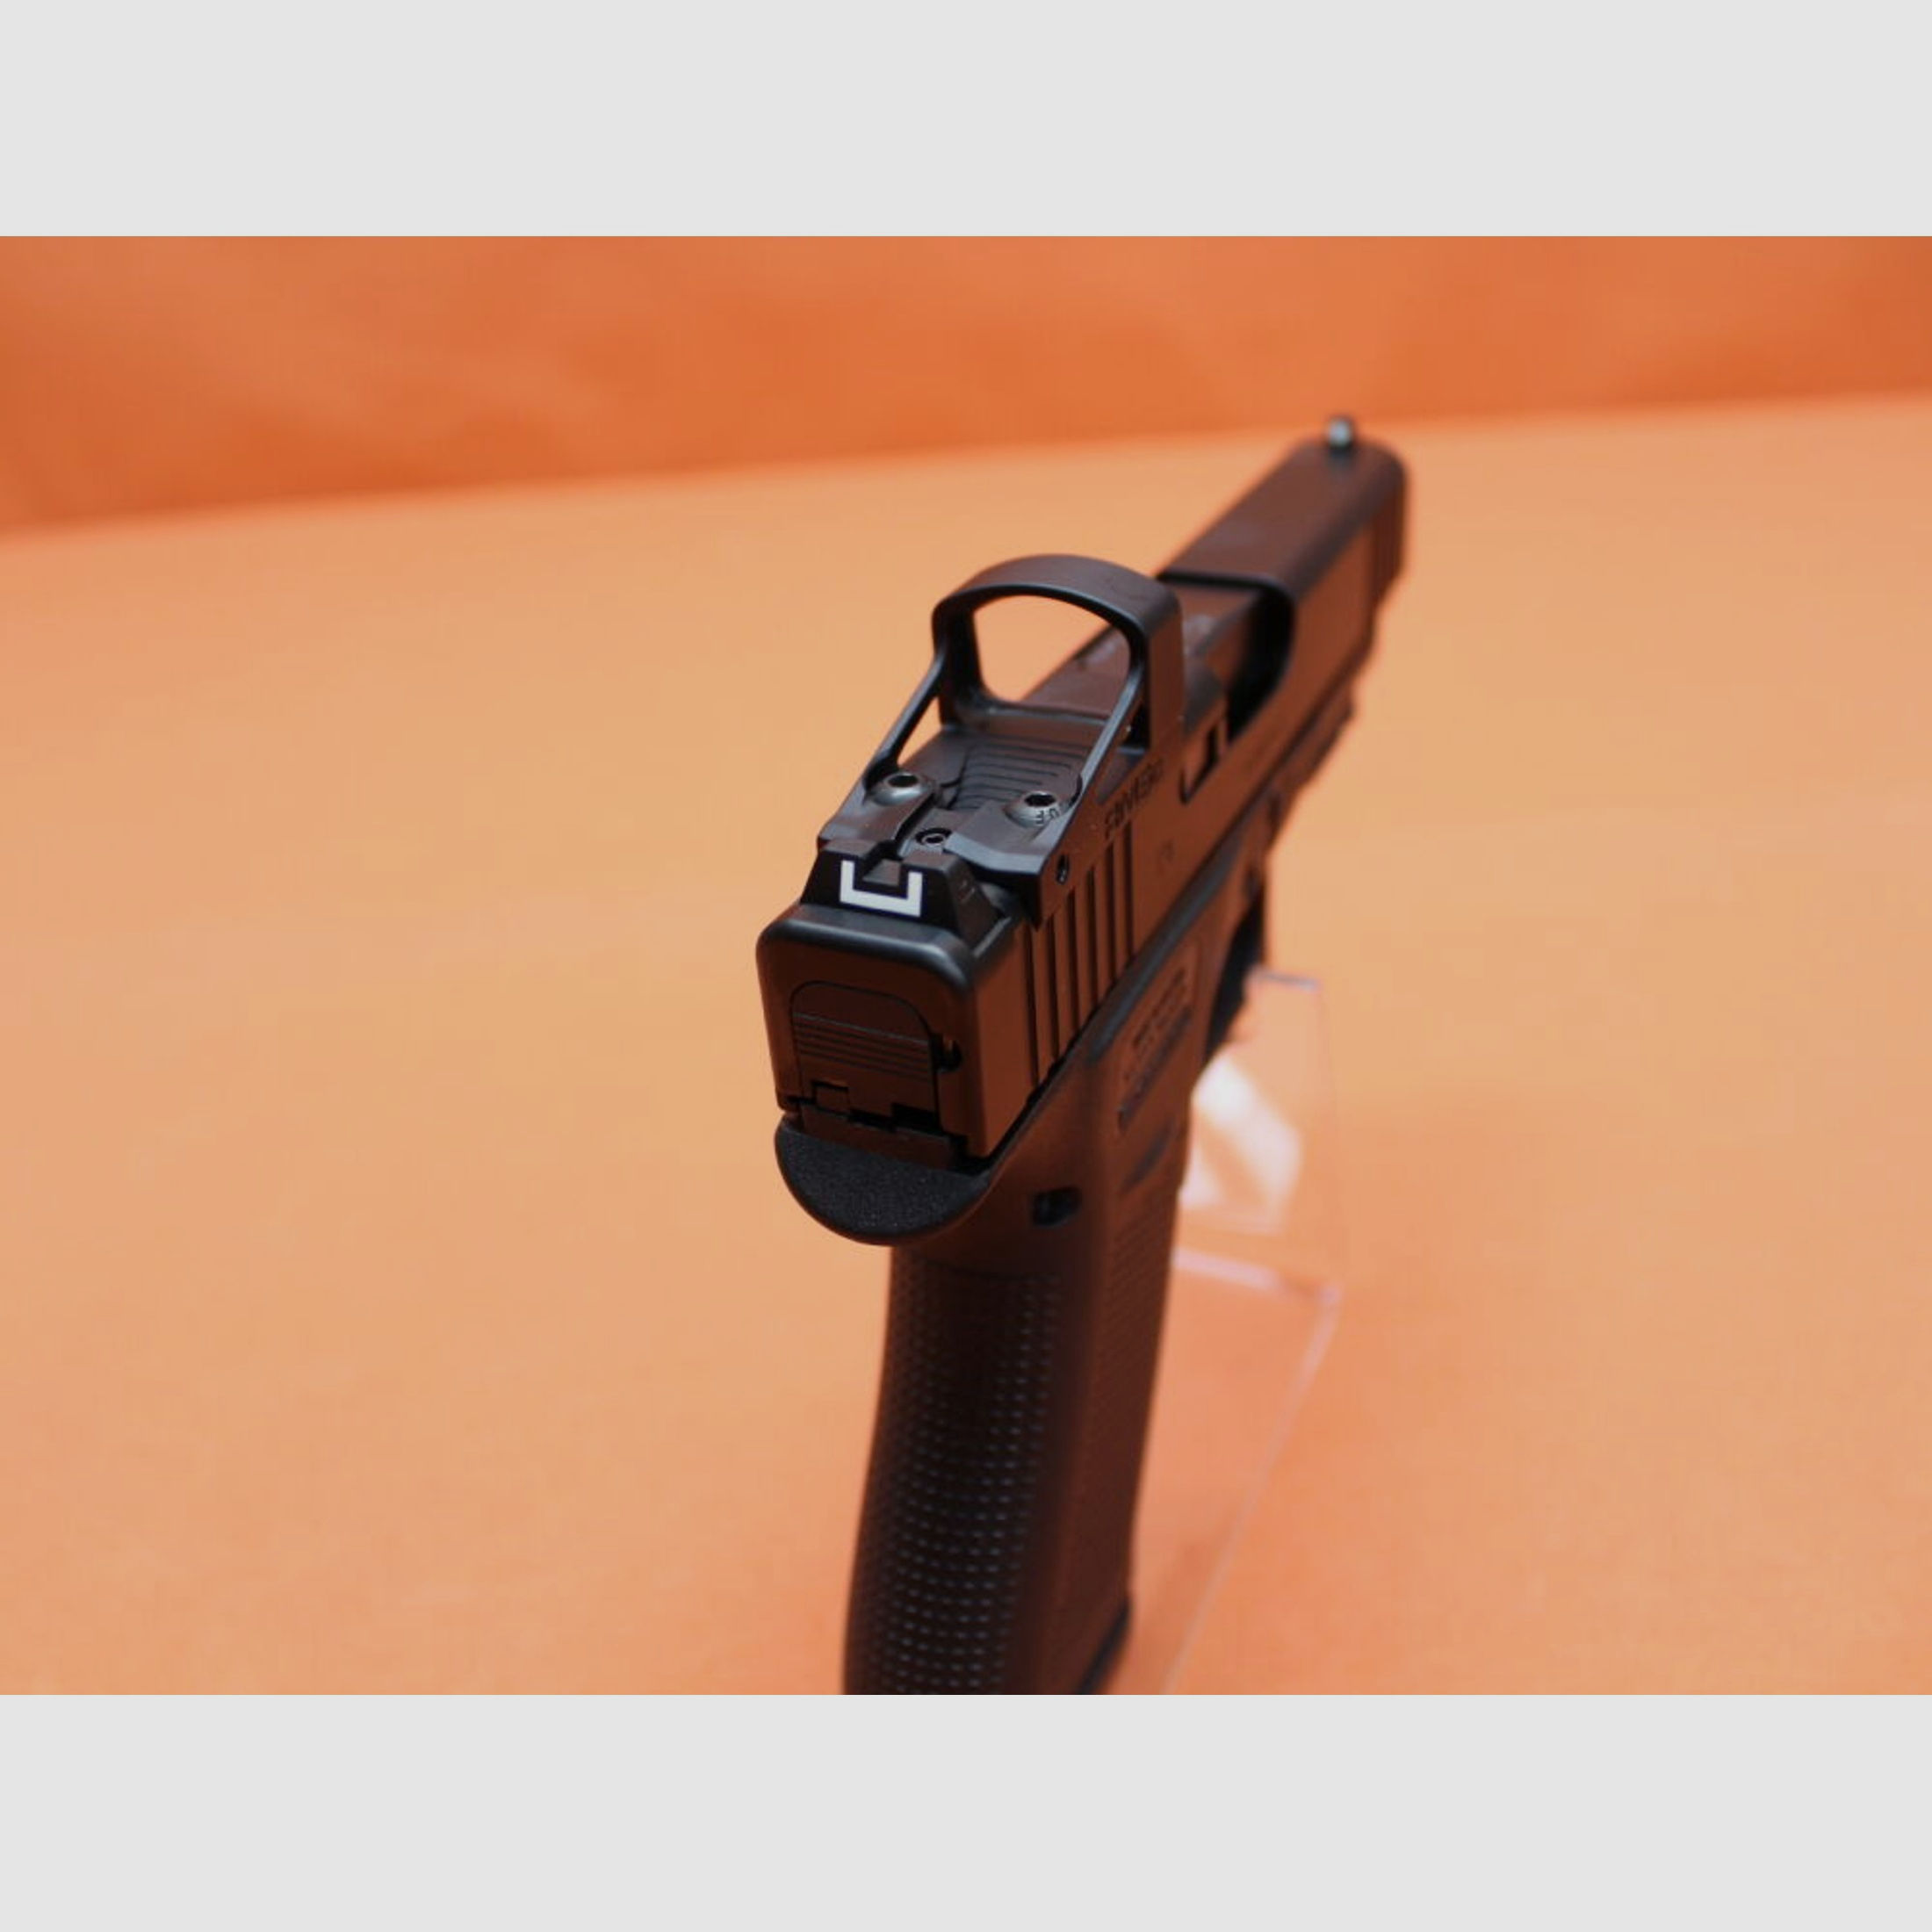 Glock	 Ha.Pistole 9mmLuger Glock 48 R/FS MOS SHIELD RMSc Slimline 106mm Lauf/ Leuchtpunktvisier